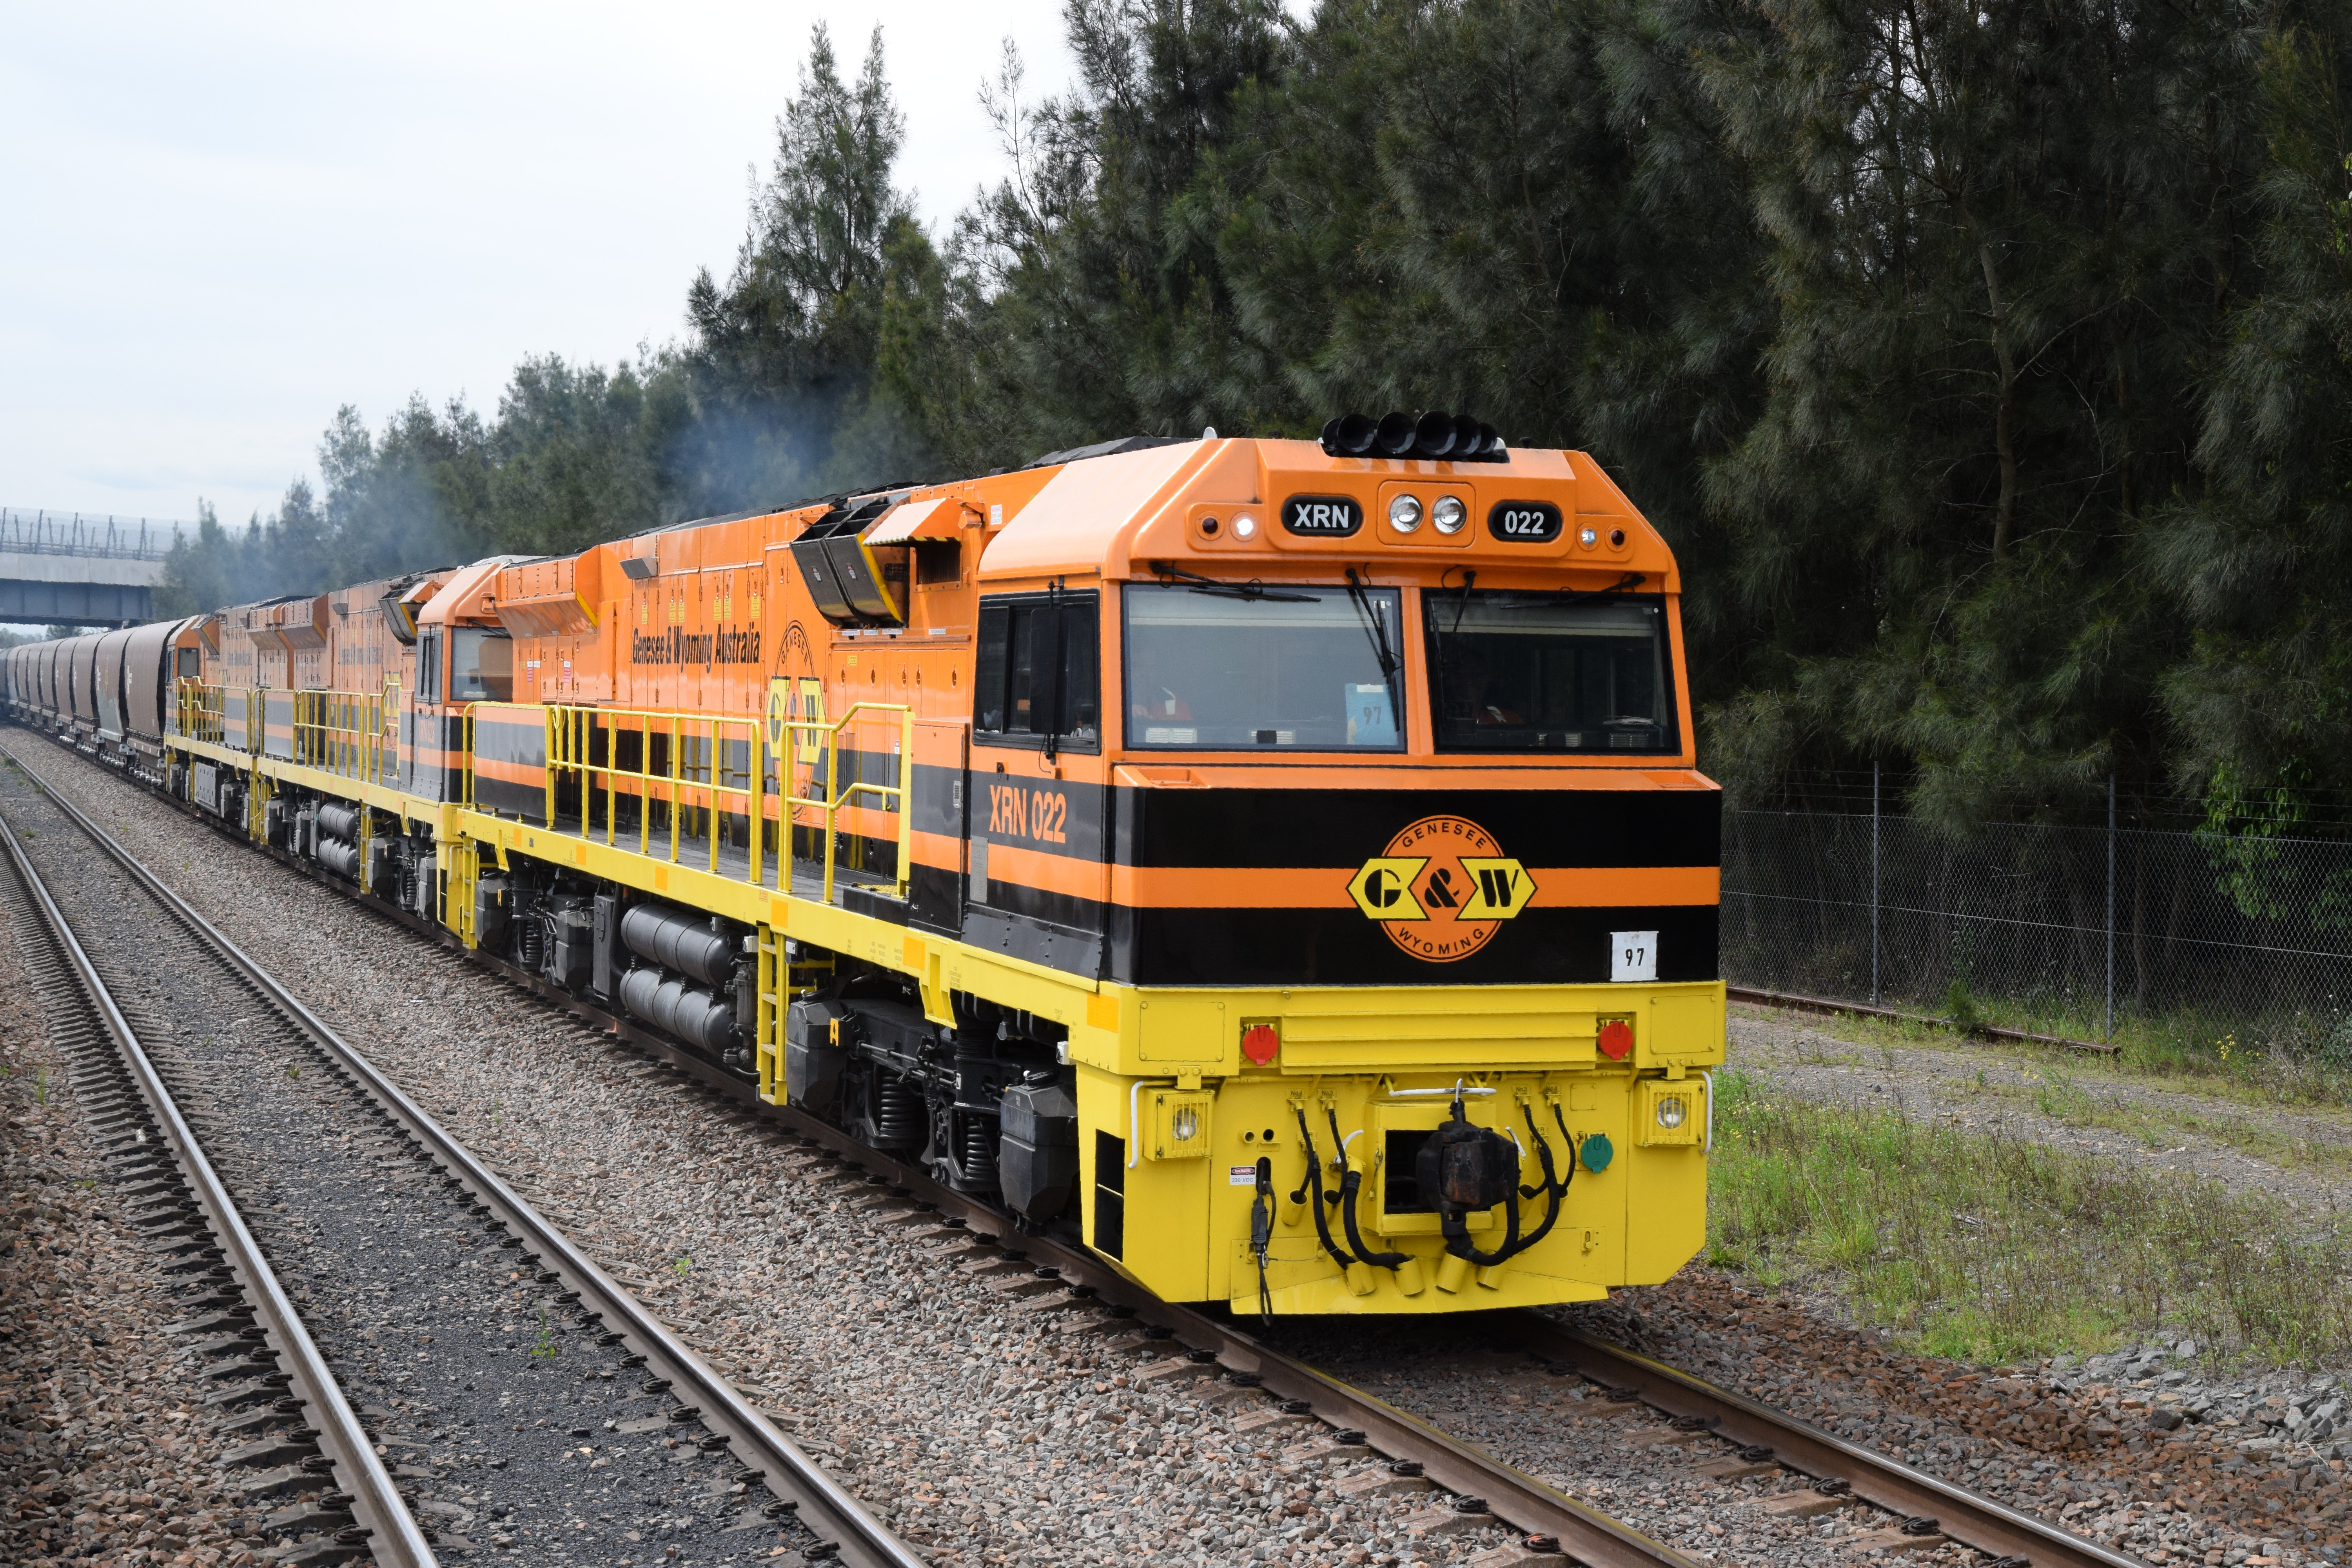 Freight train in NSW Australia